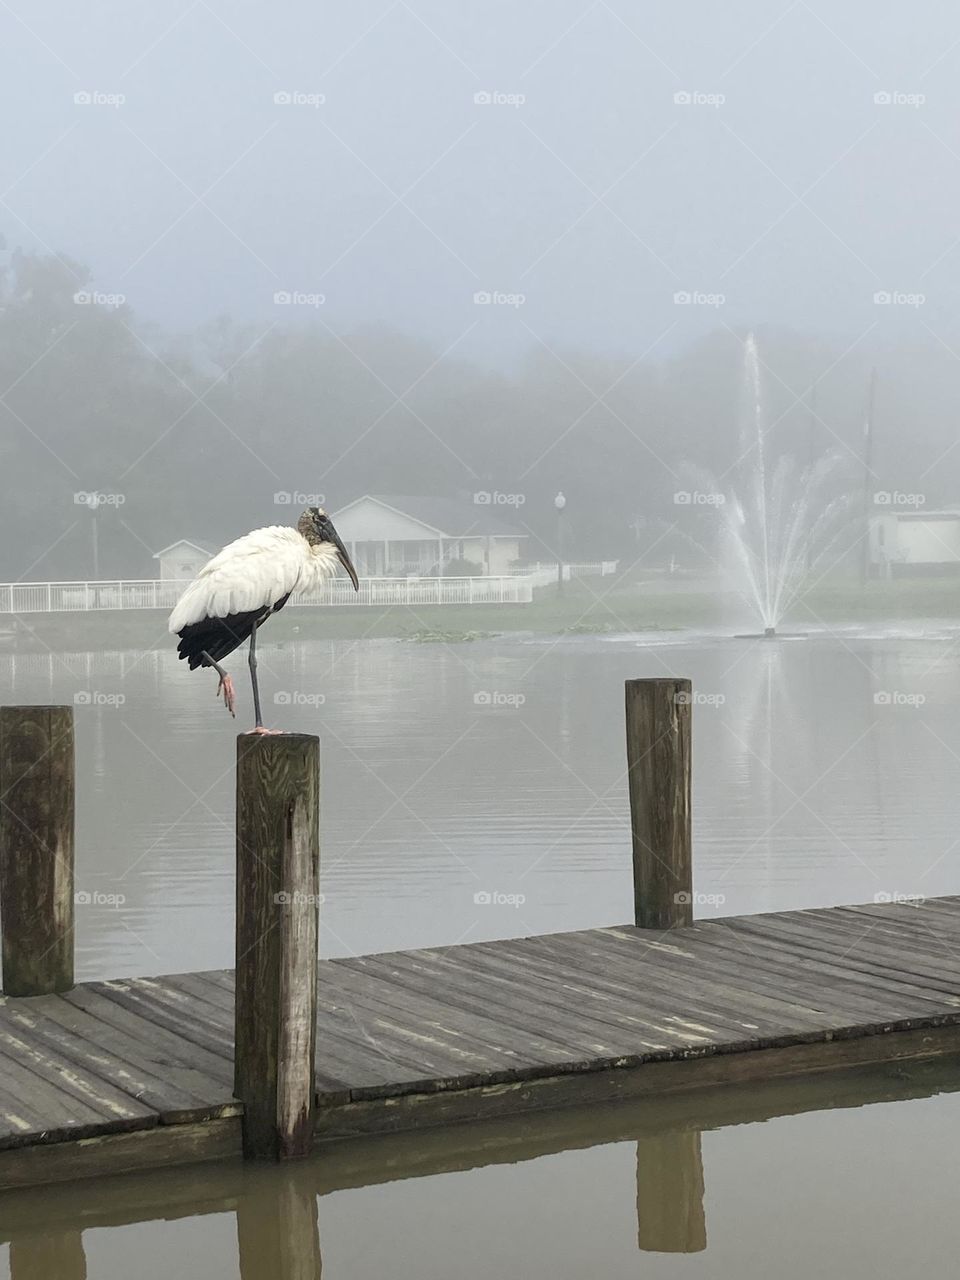 Big bird on a pier at a lake